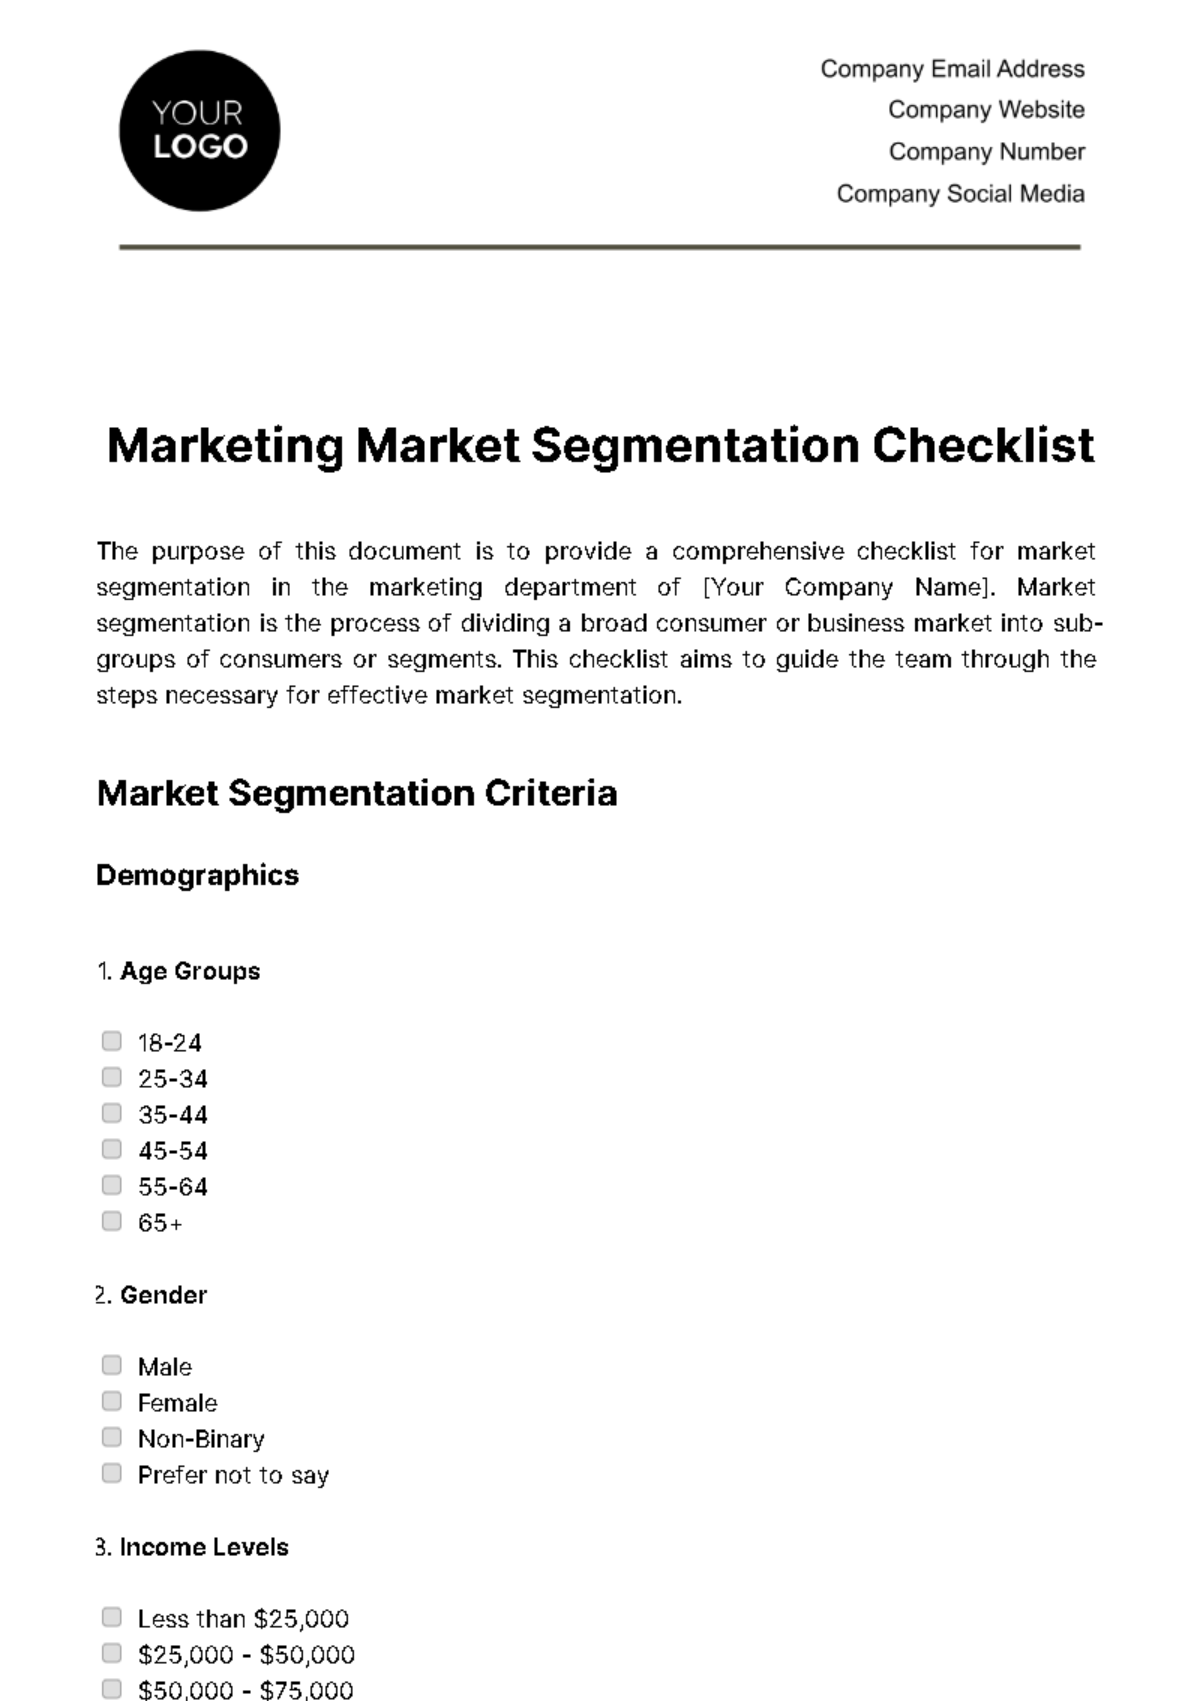 Marketing Market Segmentation Checklist Template